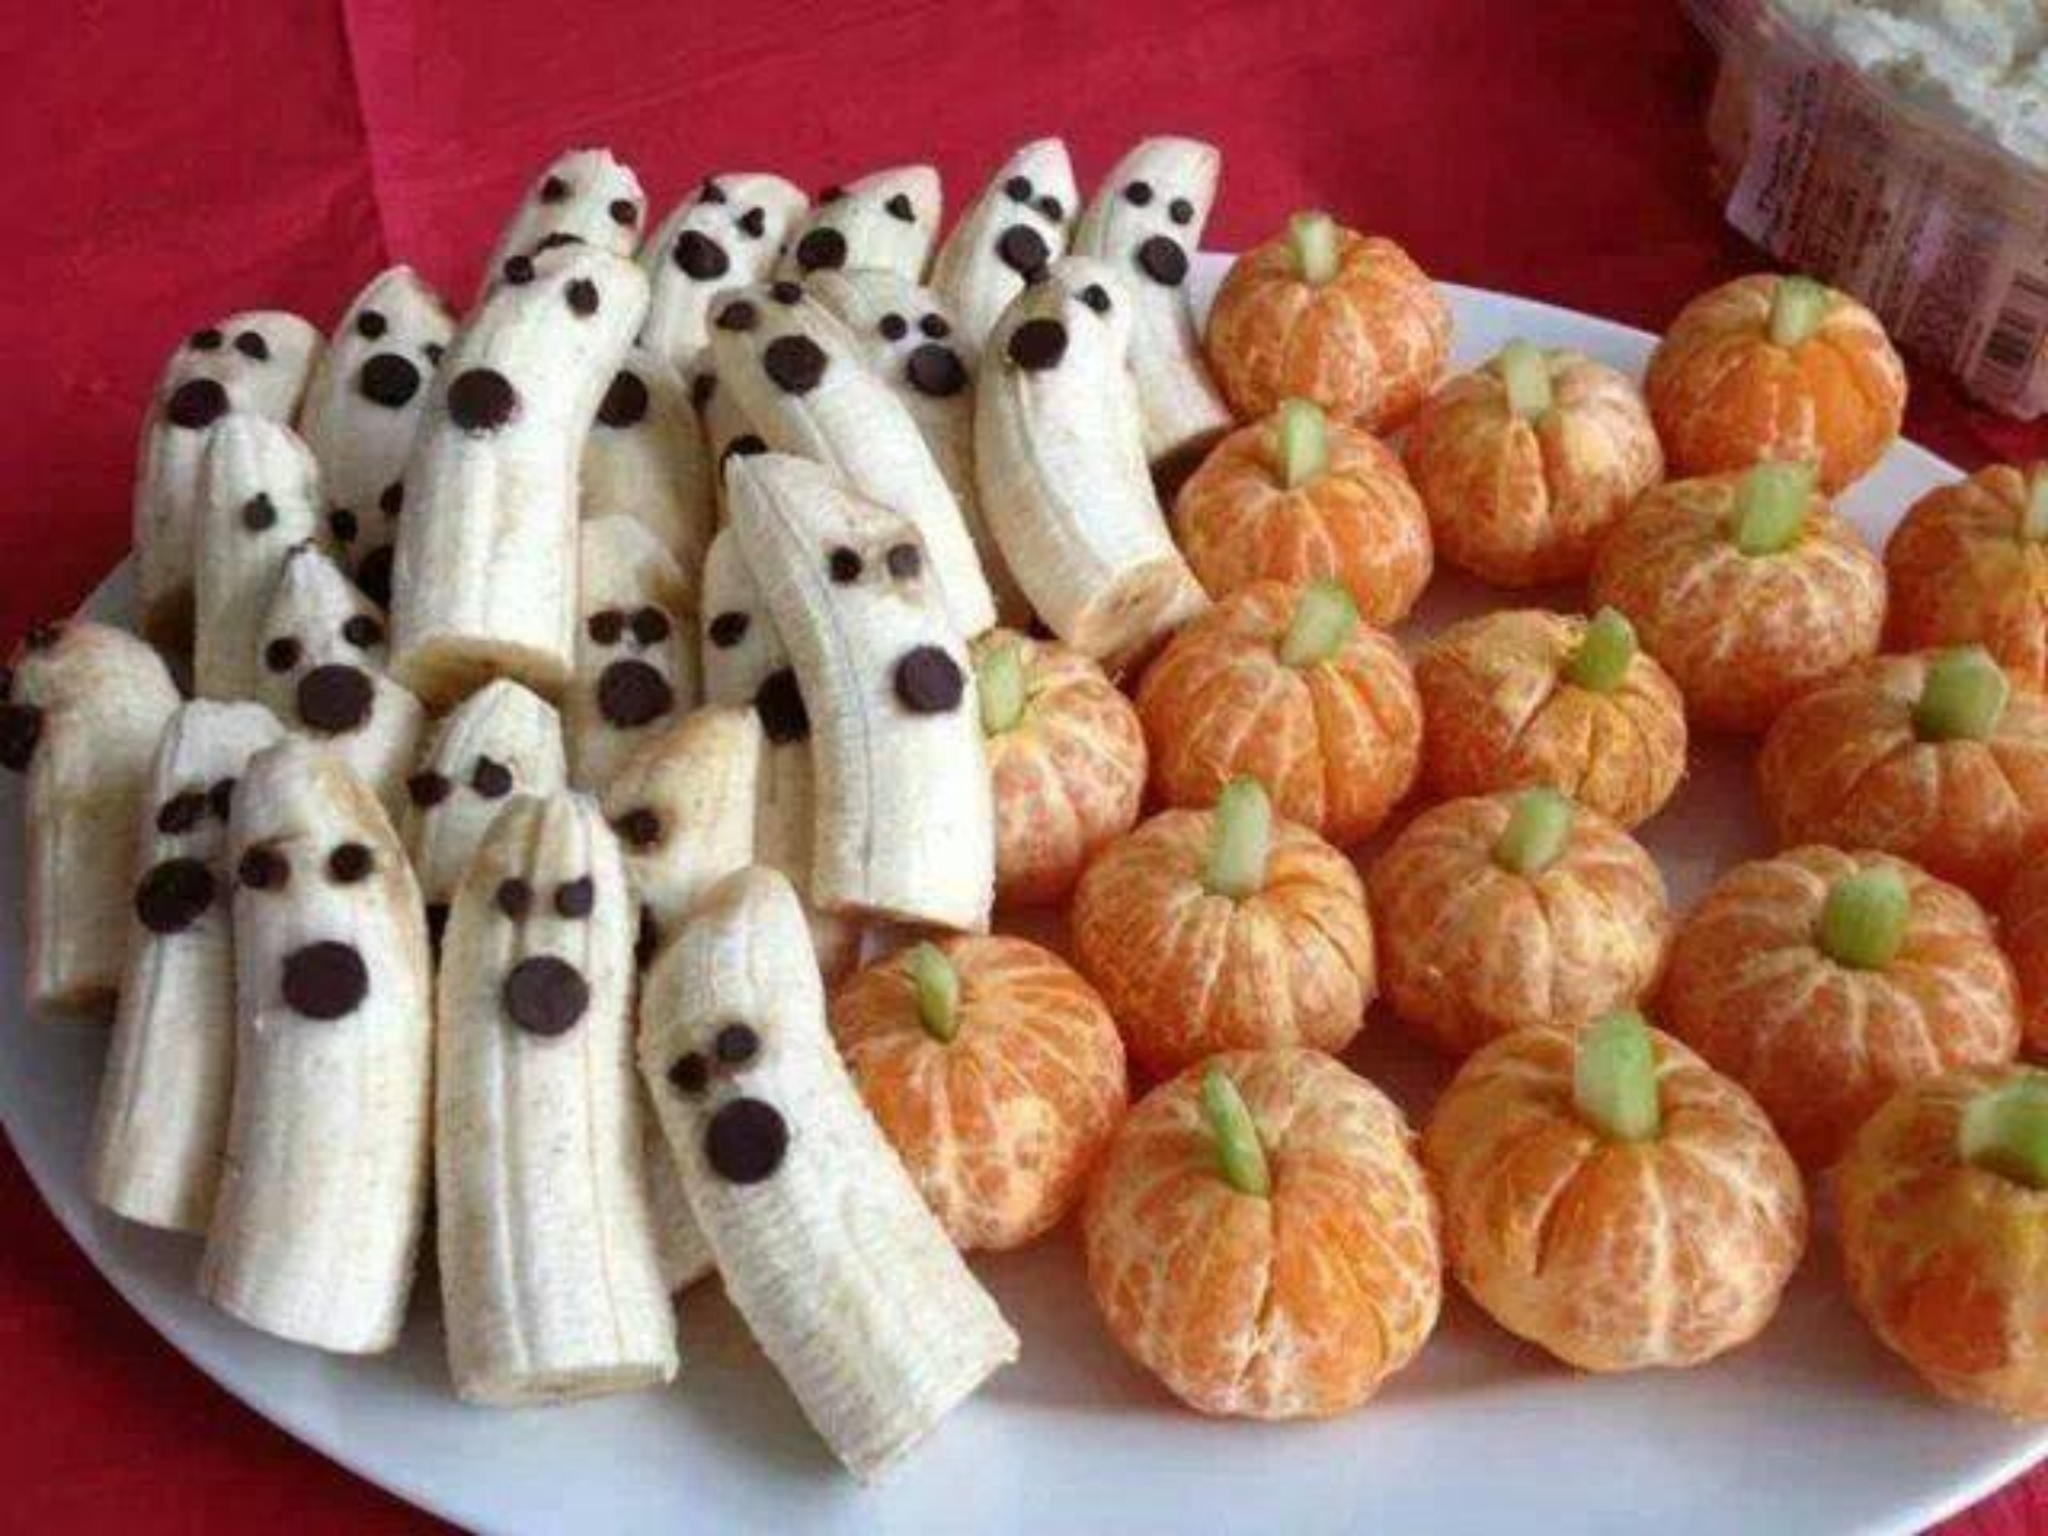 Banana and Orange Halloween Treats - Creative Fruit Snacks, Healthy Party Food